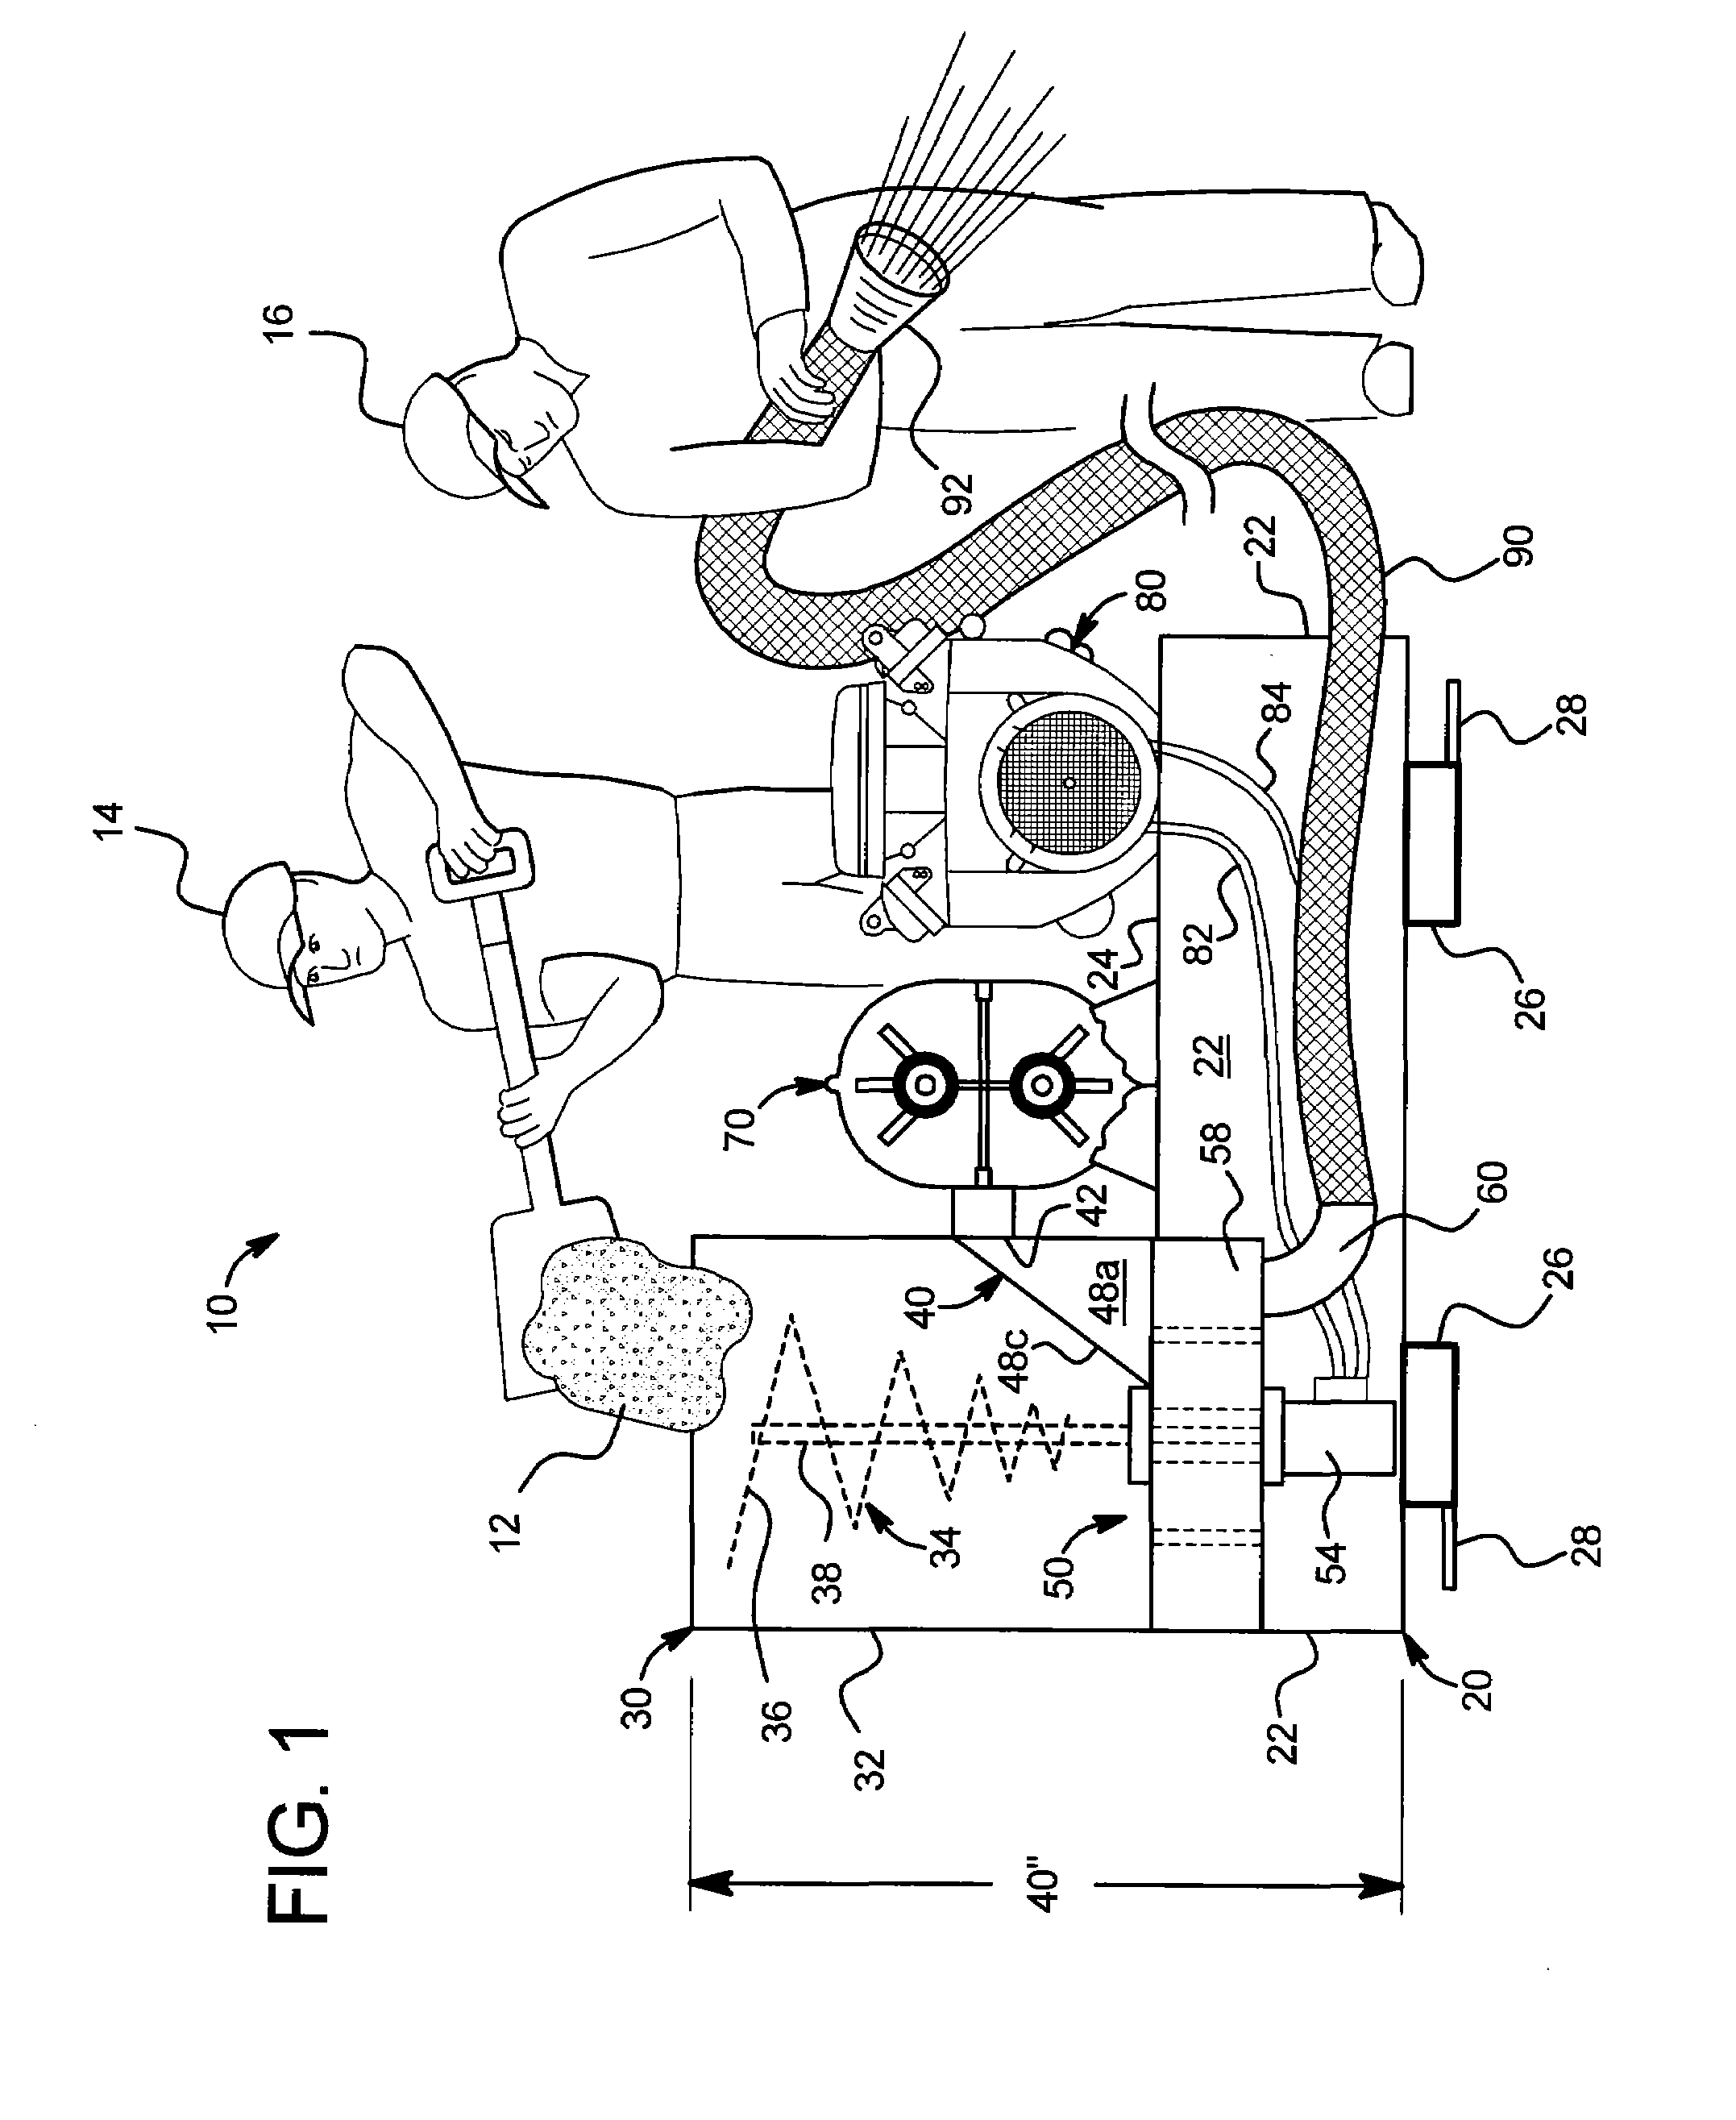 Portable pneumatic blower